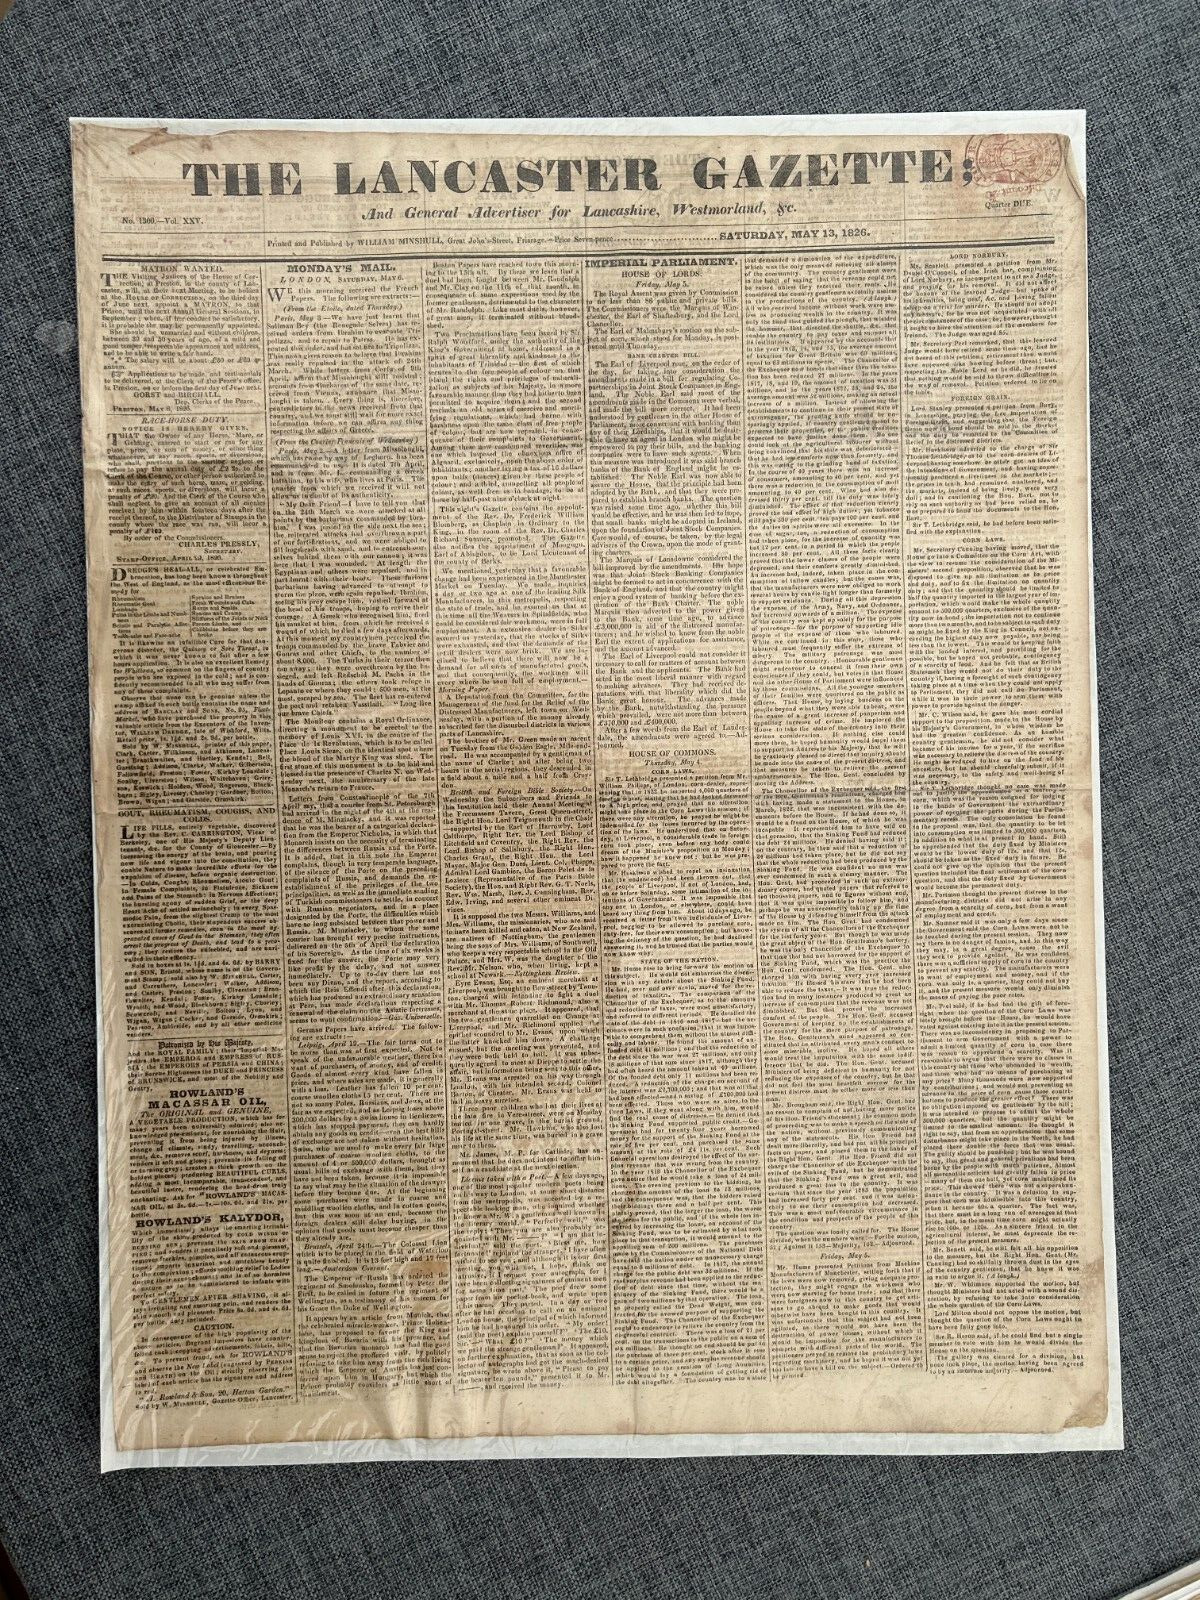 THE LANCASTER GAZETTE CORN LAWS 1826 ORIGINAL NEWSPAPER